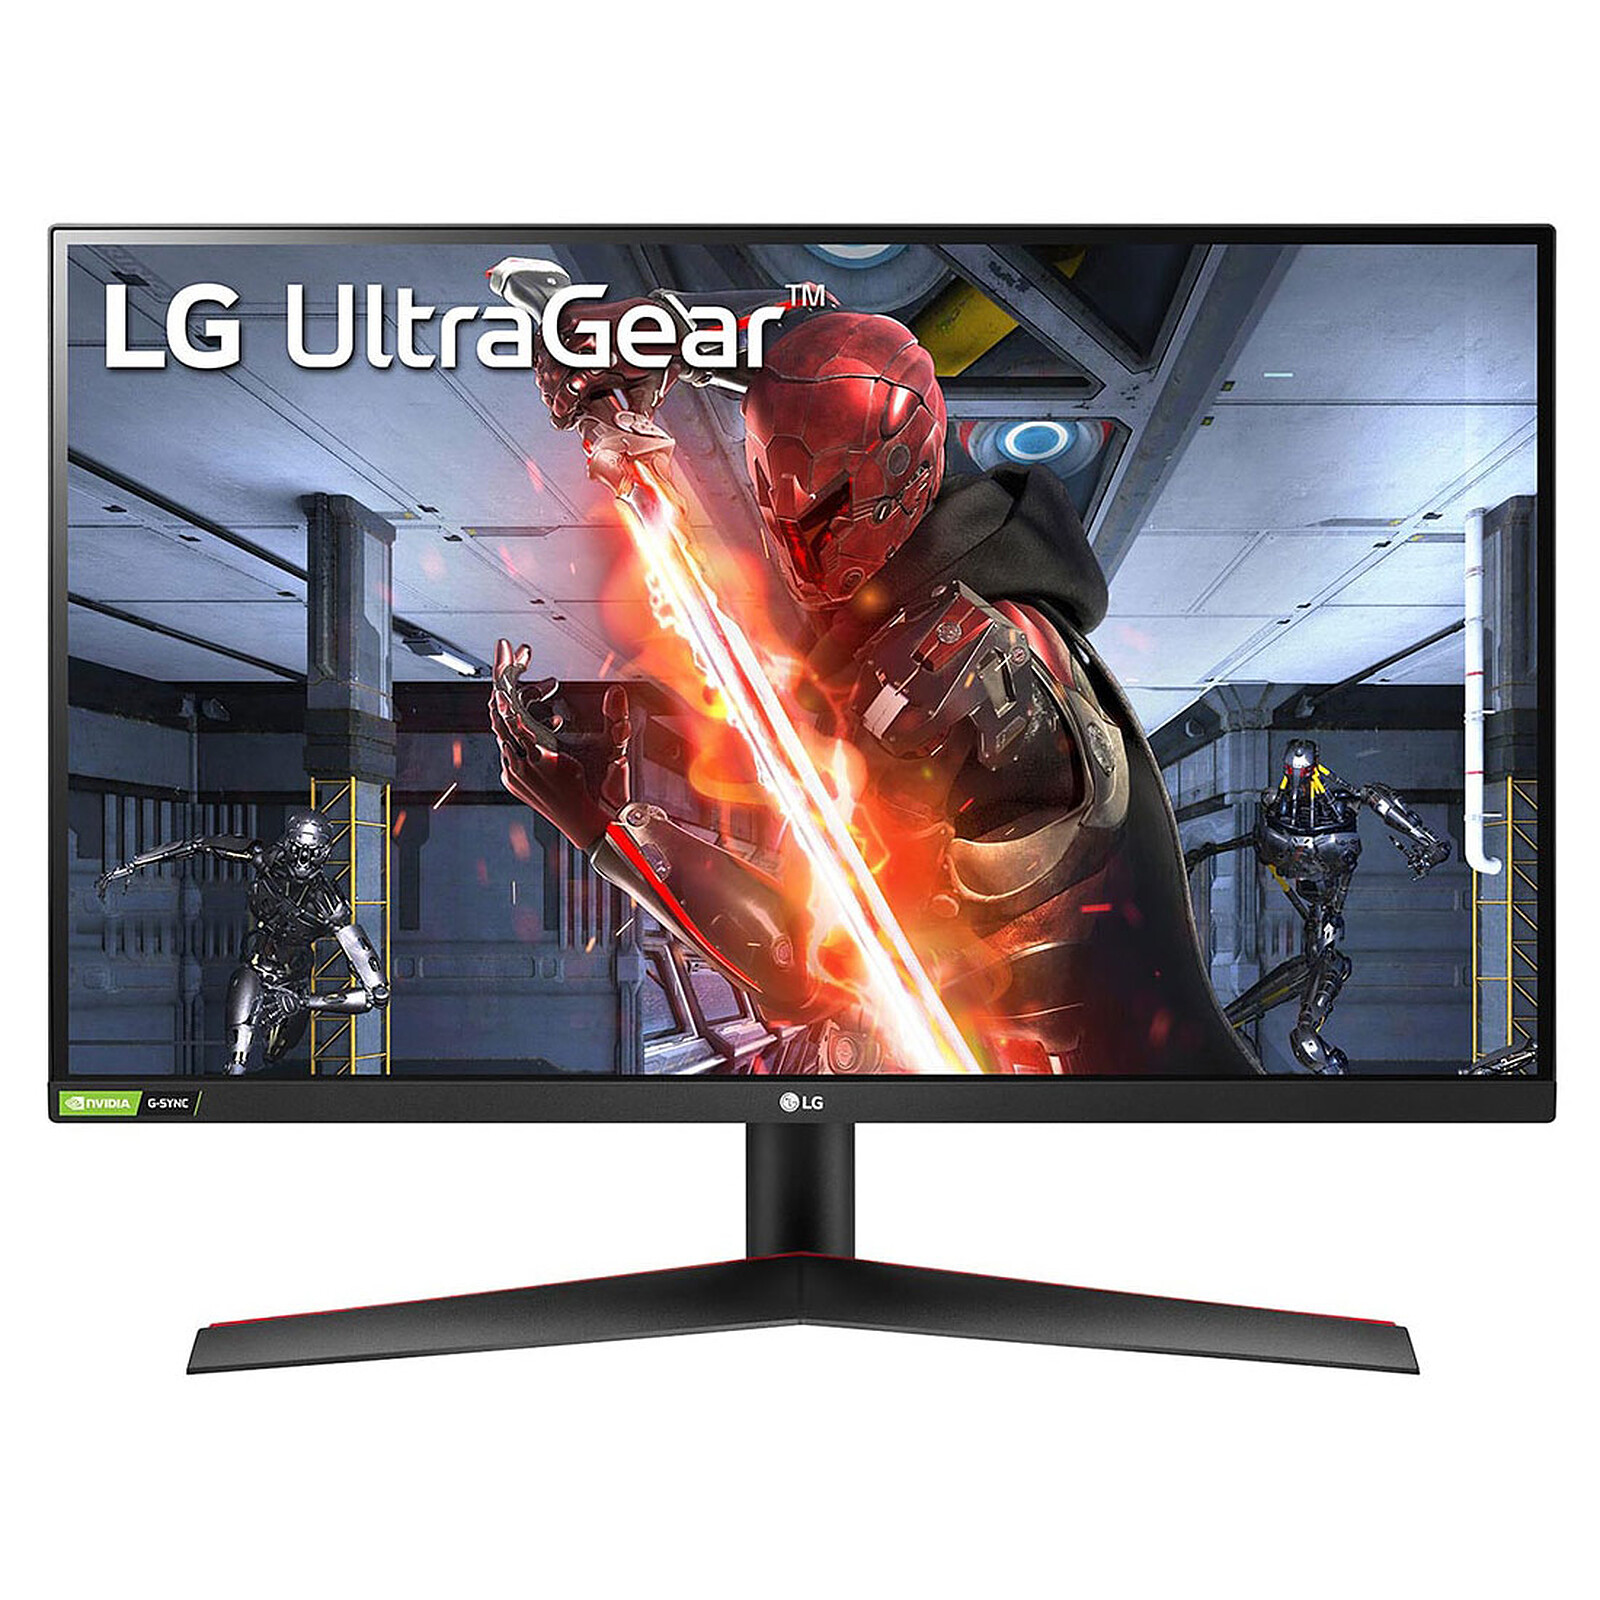 LG 27GP850 Monitor Settings Guide - Gaming, Work and Multimedia